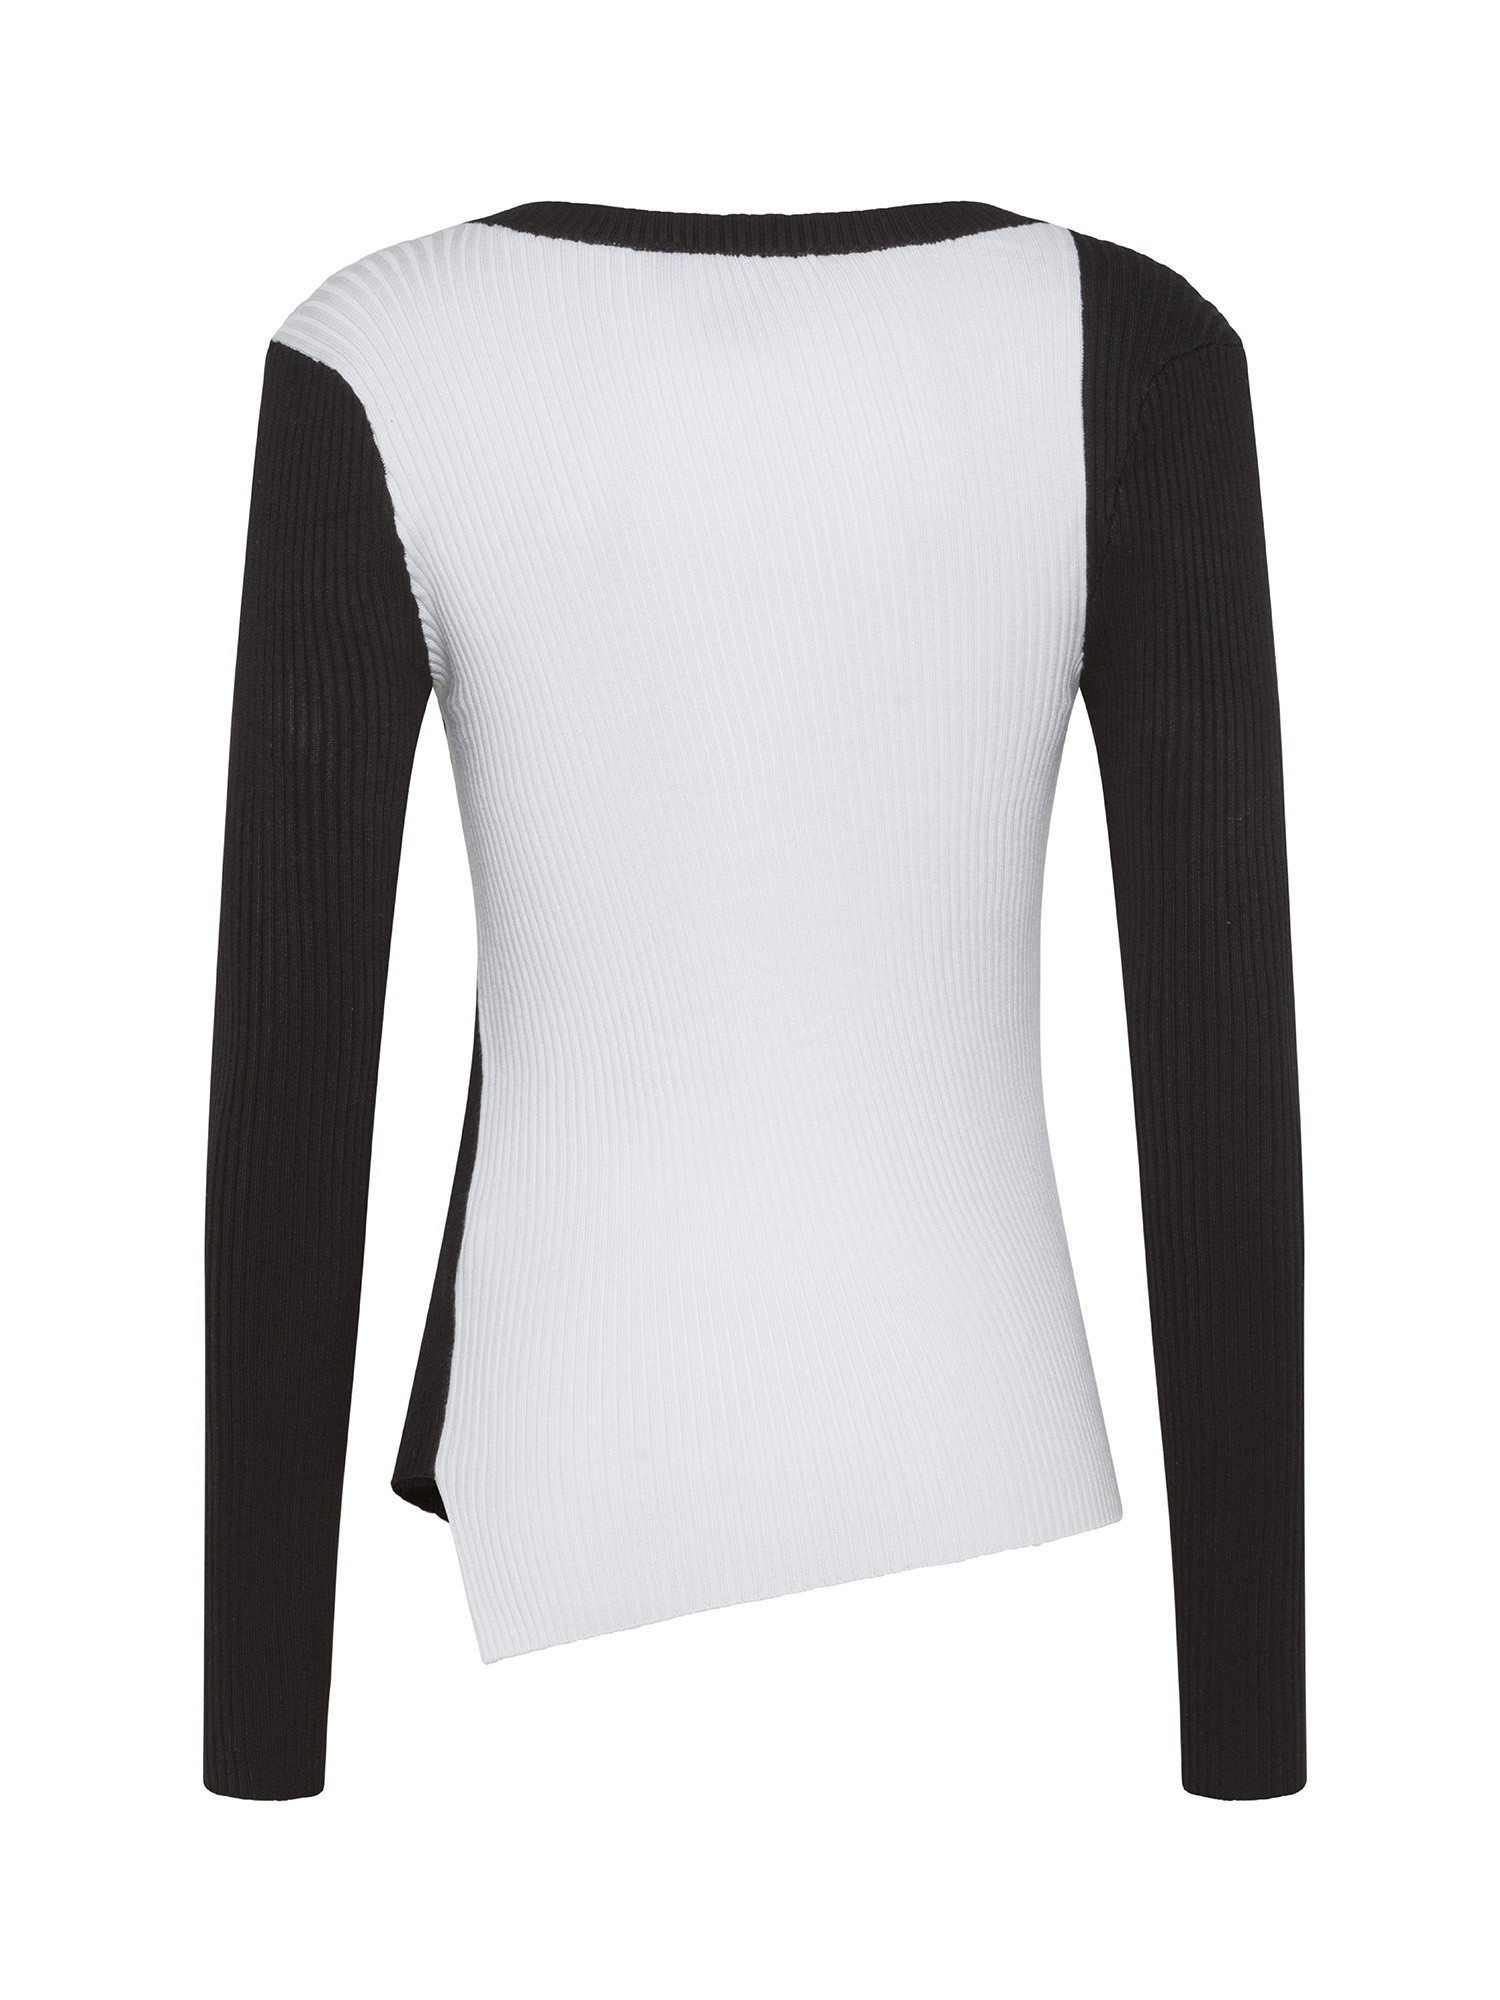 DKNY - Color block crewneck sweater, Black, large image number 1